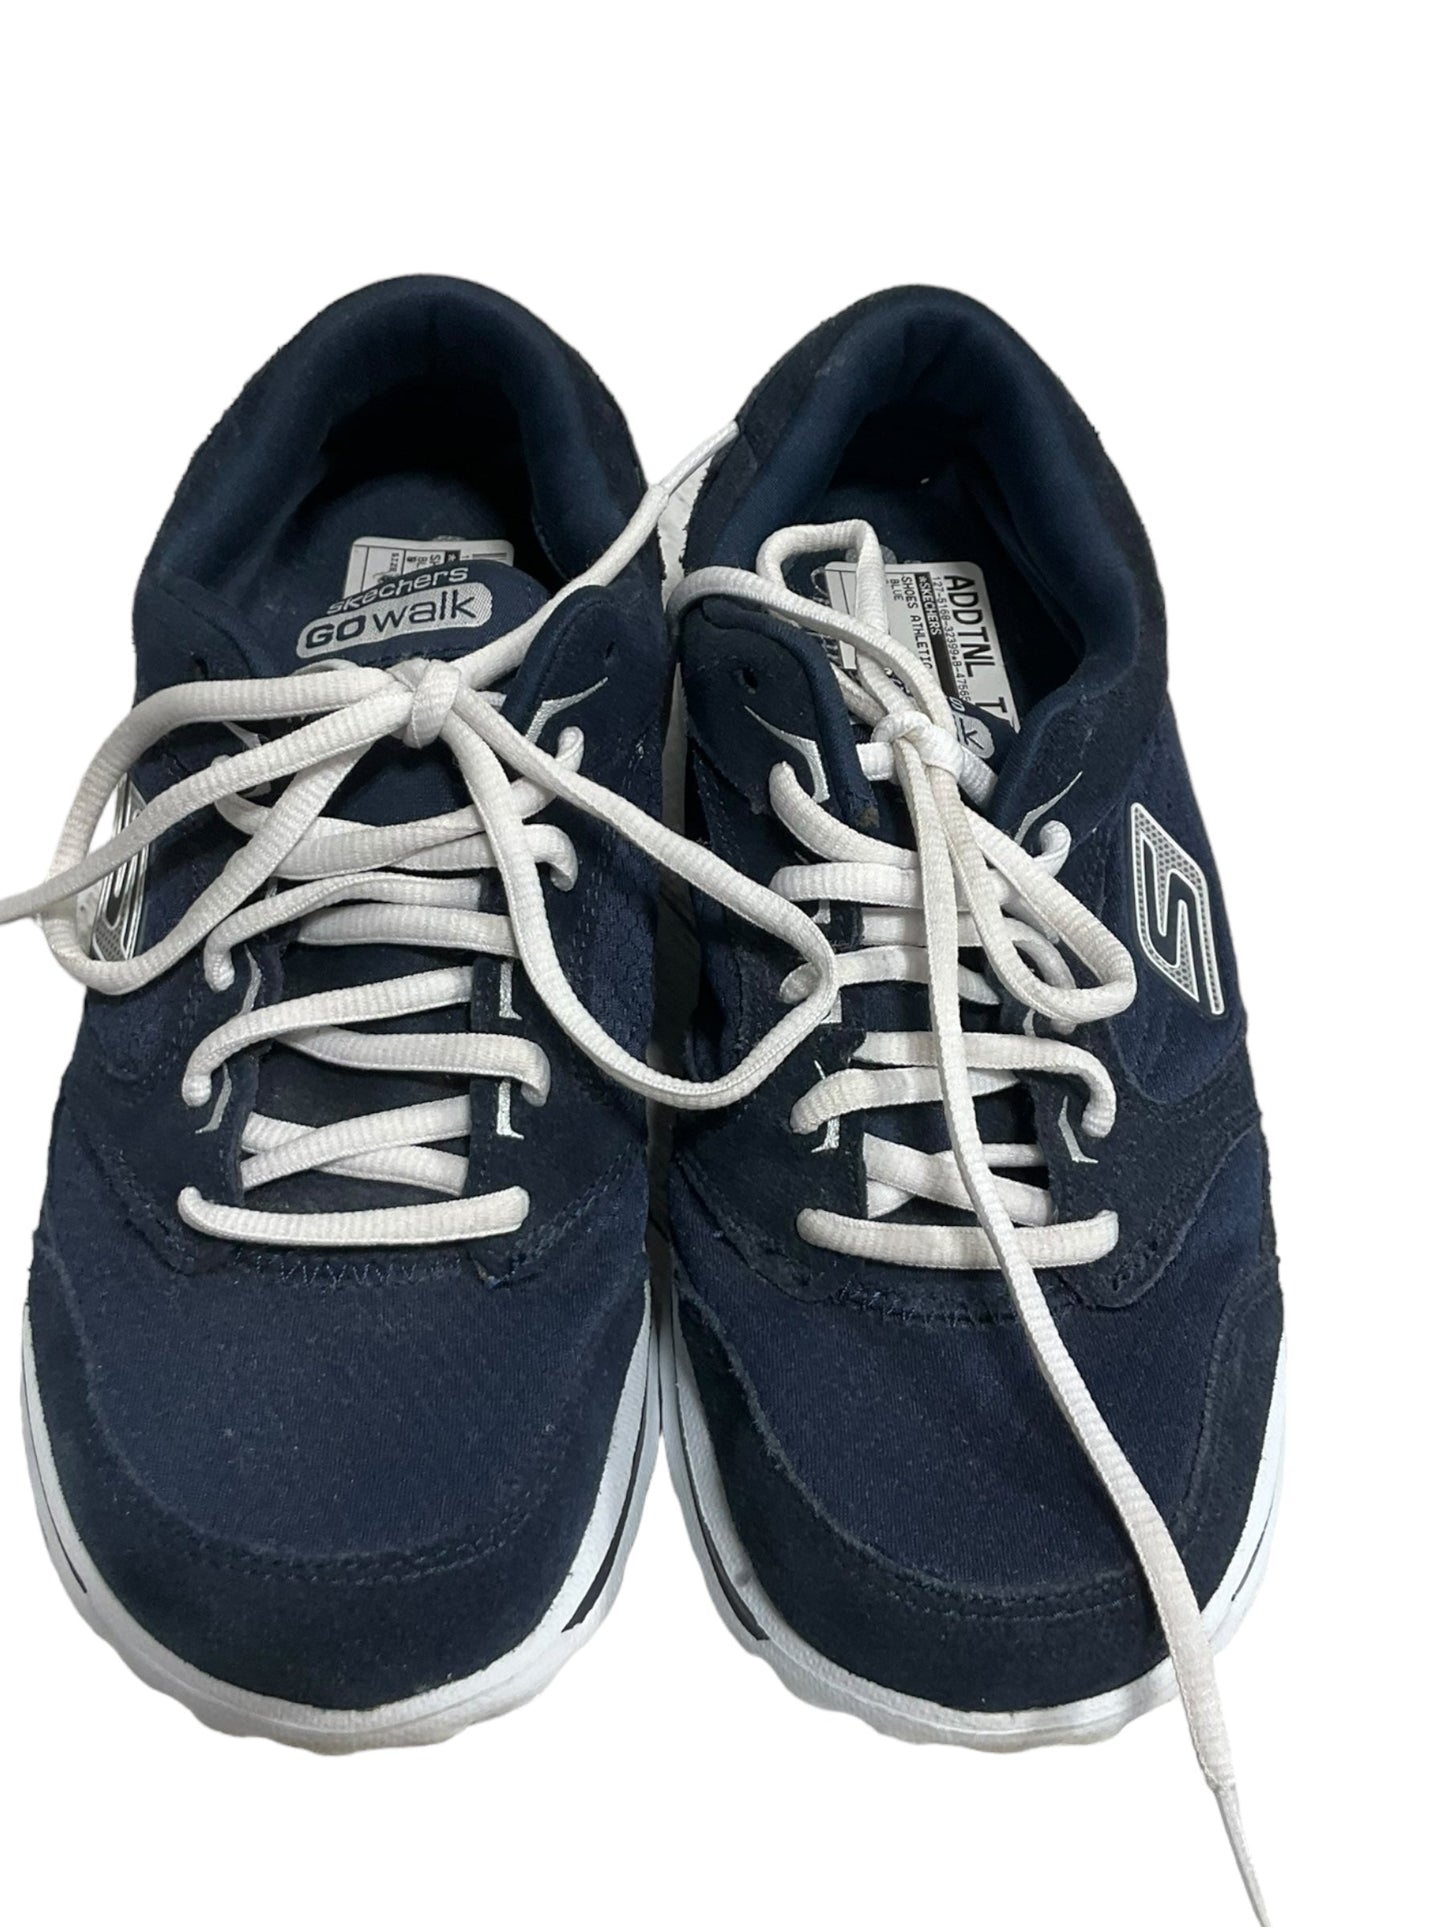 Blue Shoes Athletic Skechers, Size 8